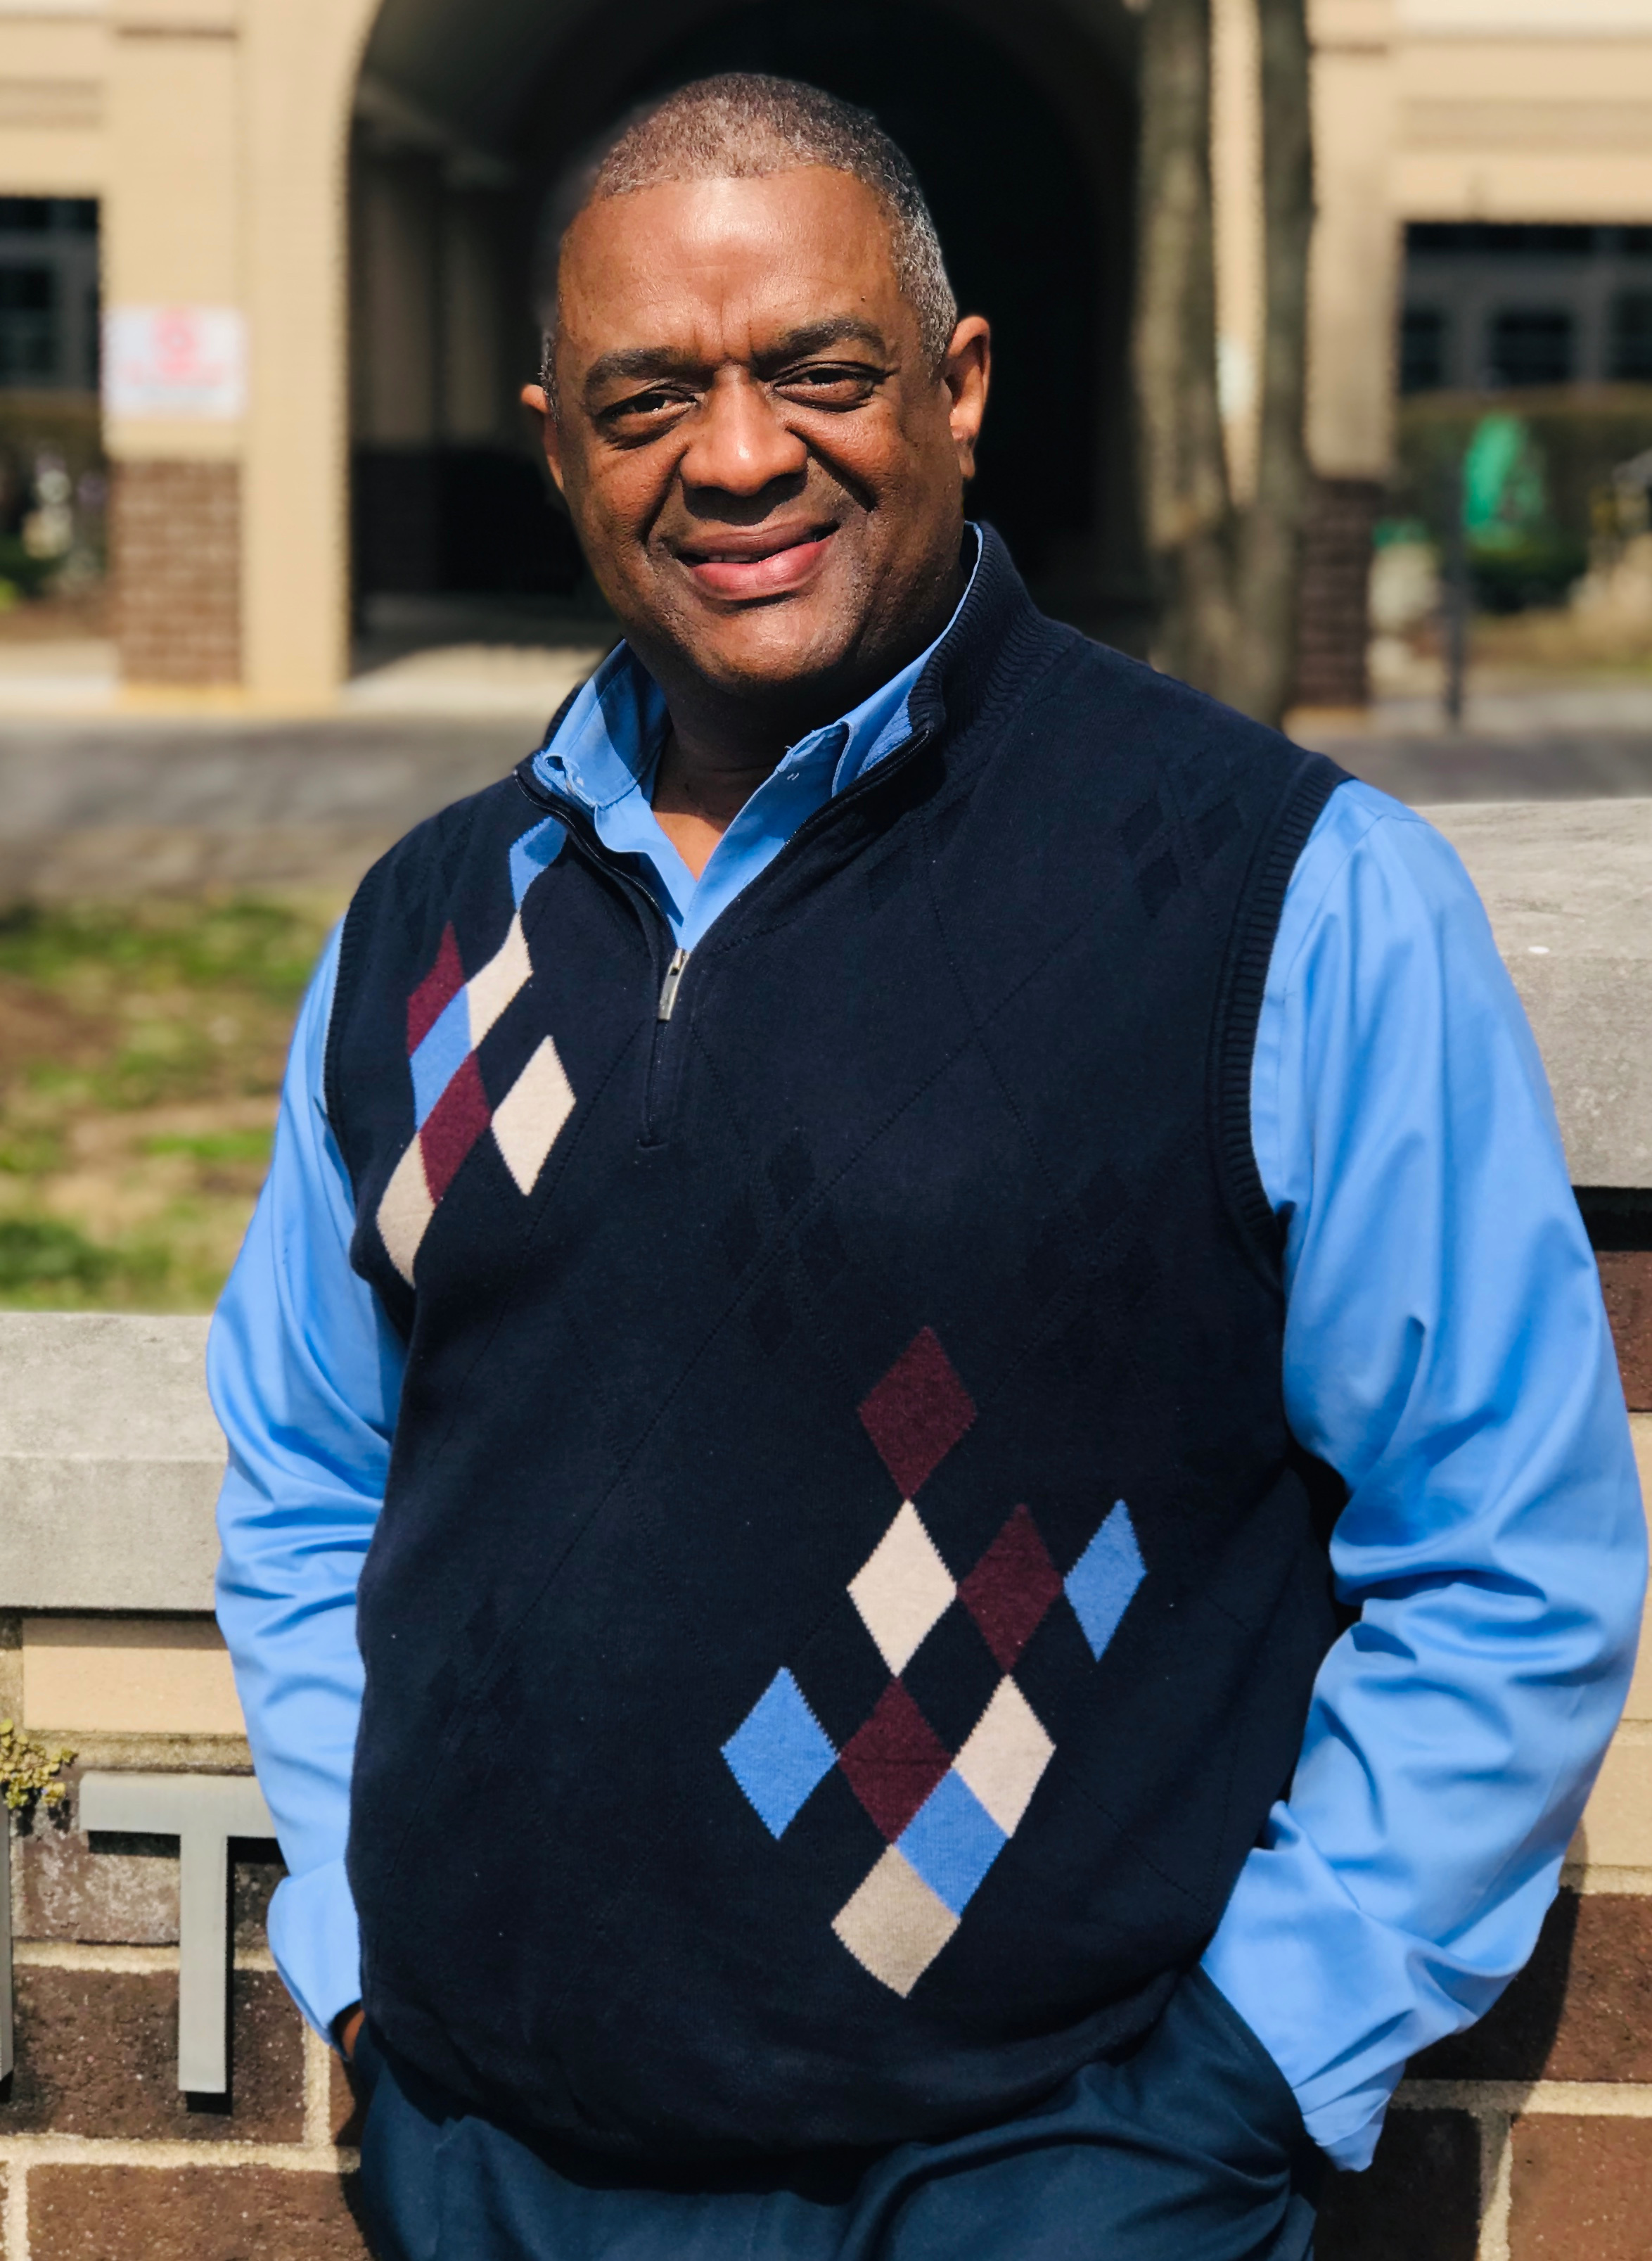 Mark Johnson named 2019 Dr. Rice C. Leach Public Health Hero